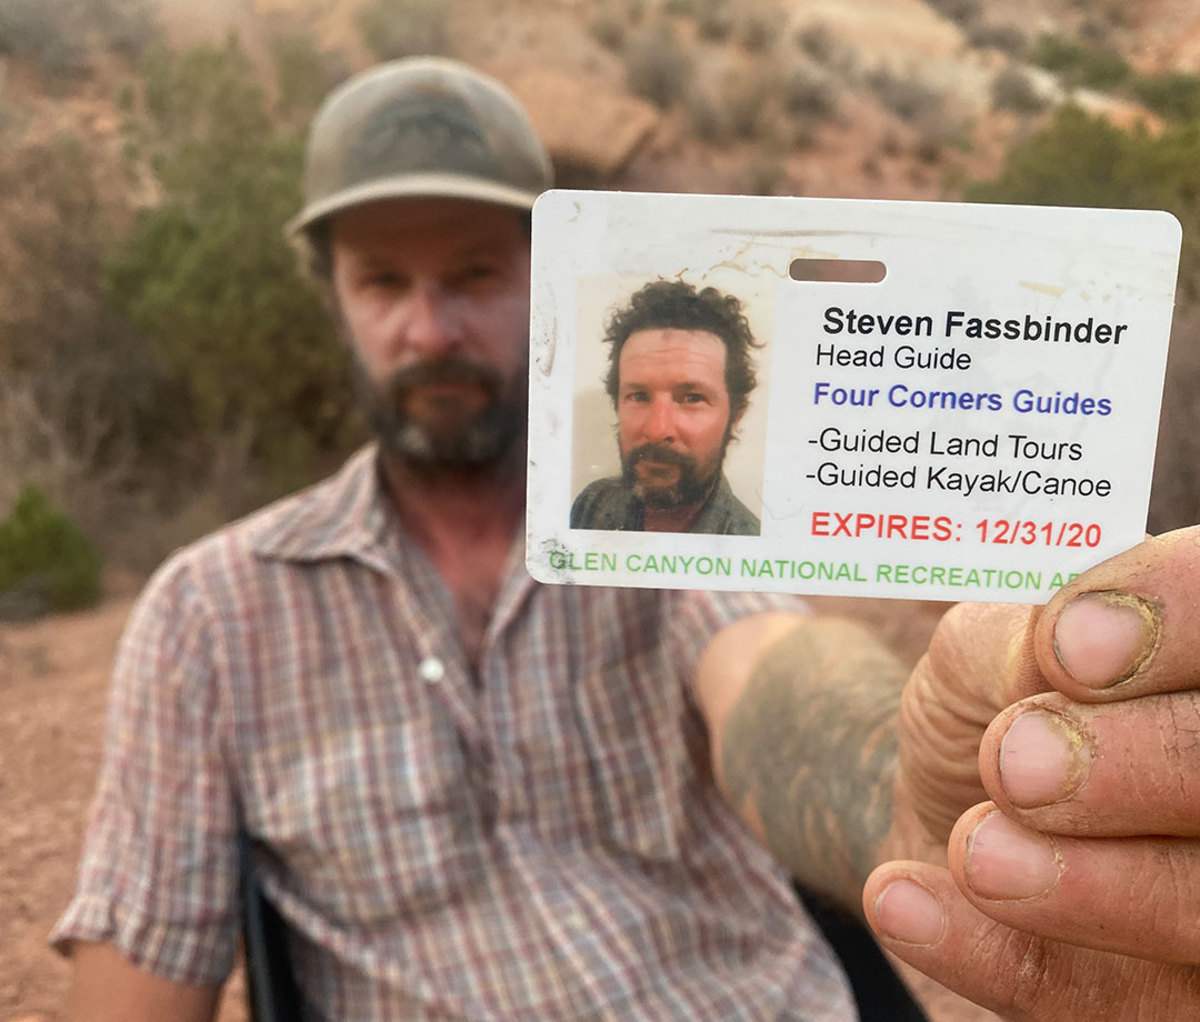 Steve Fasssbinder holding his guide card